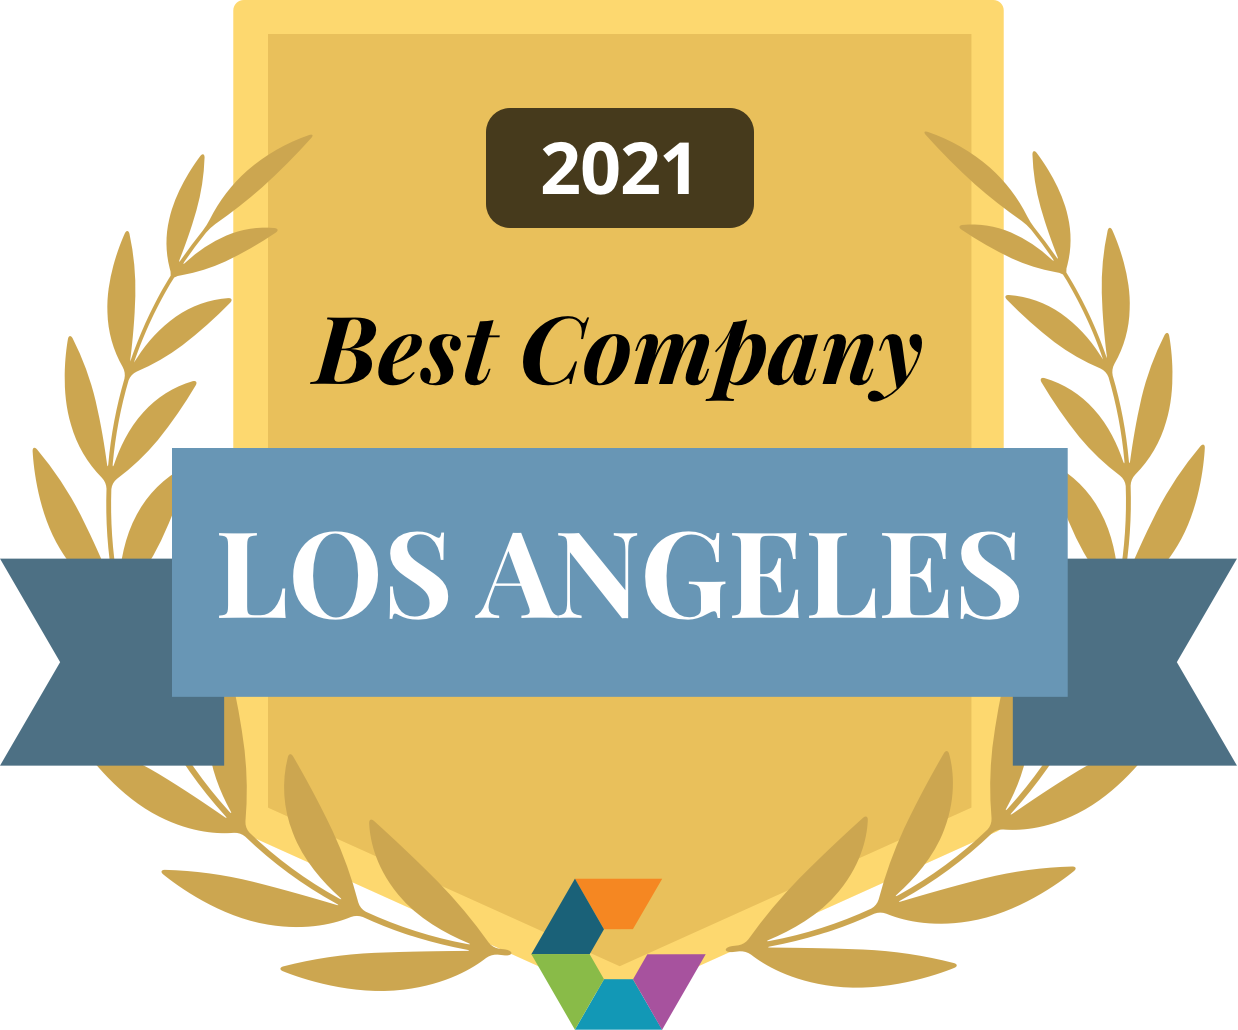 2021 Best Company Los Angeles